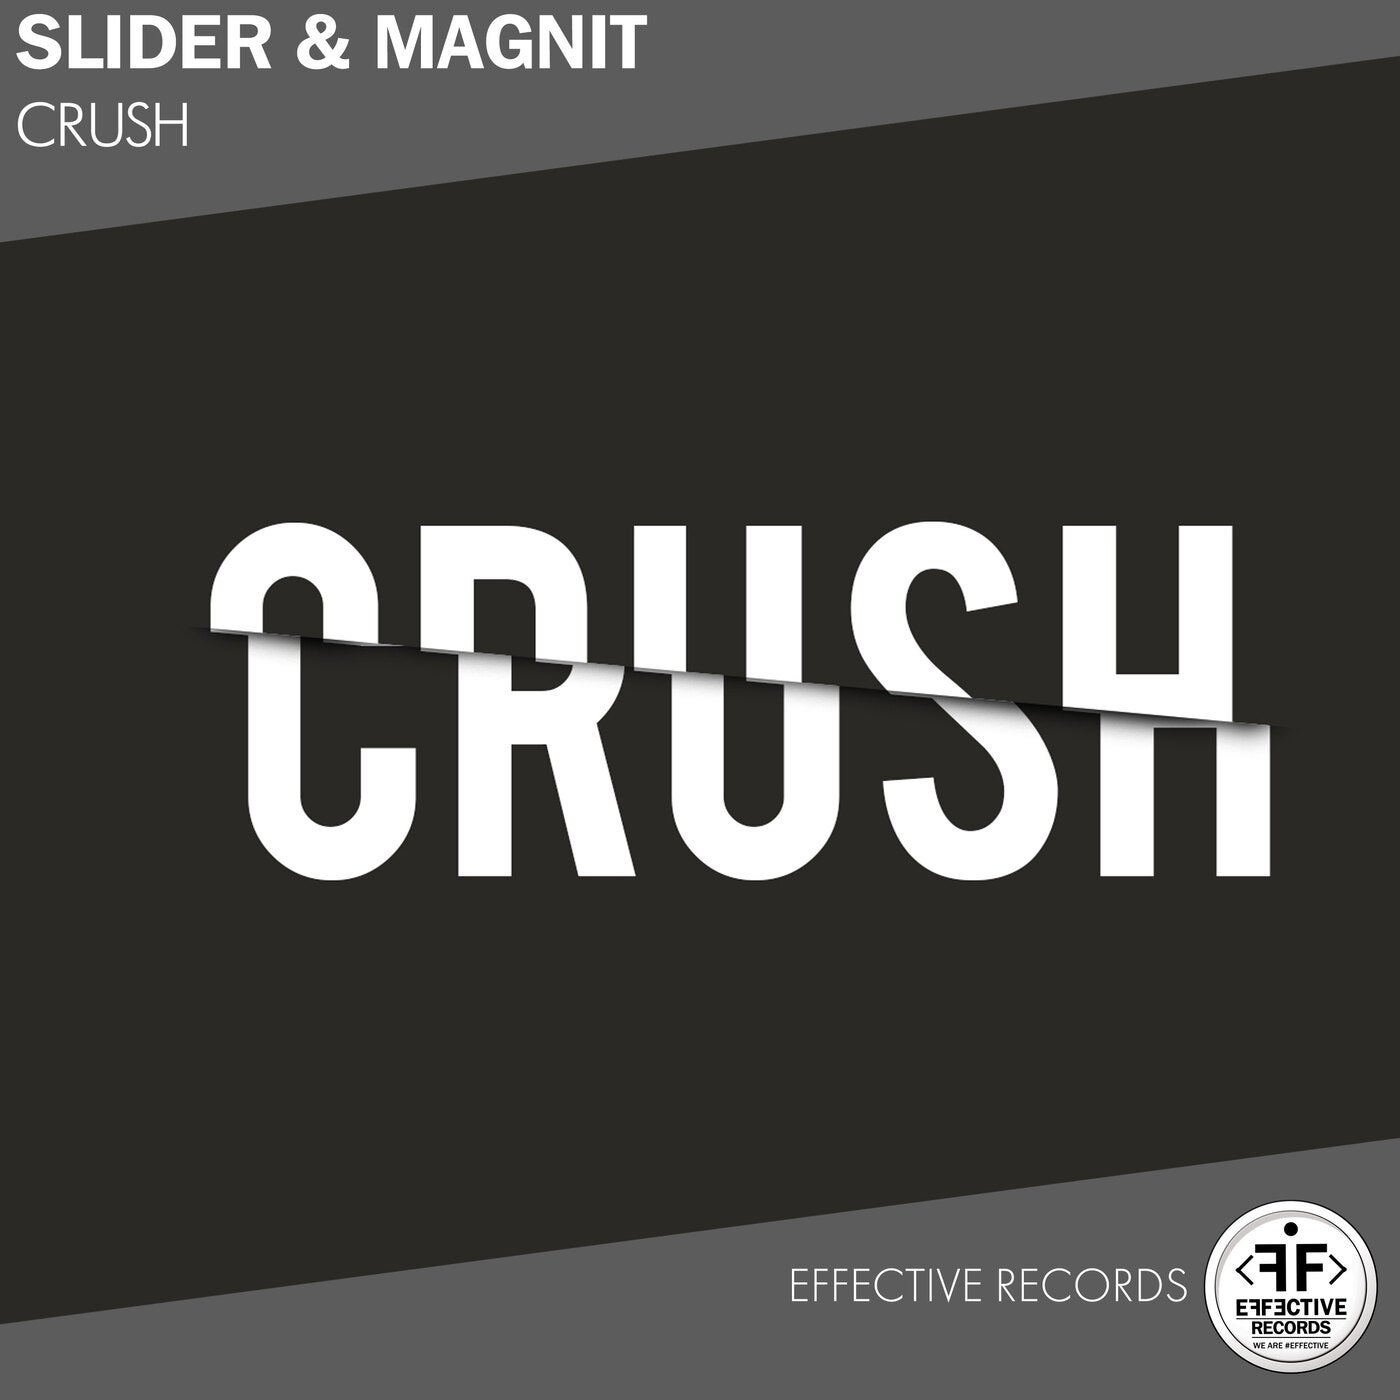 Слайдер песни. Слайдер и магнит. Футболка effective records. Slider & Magnit - i feel your Voice. Effective records директор.